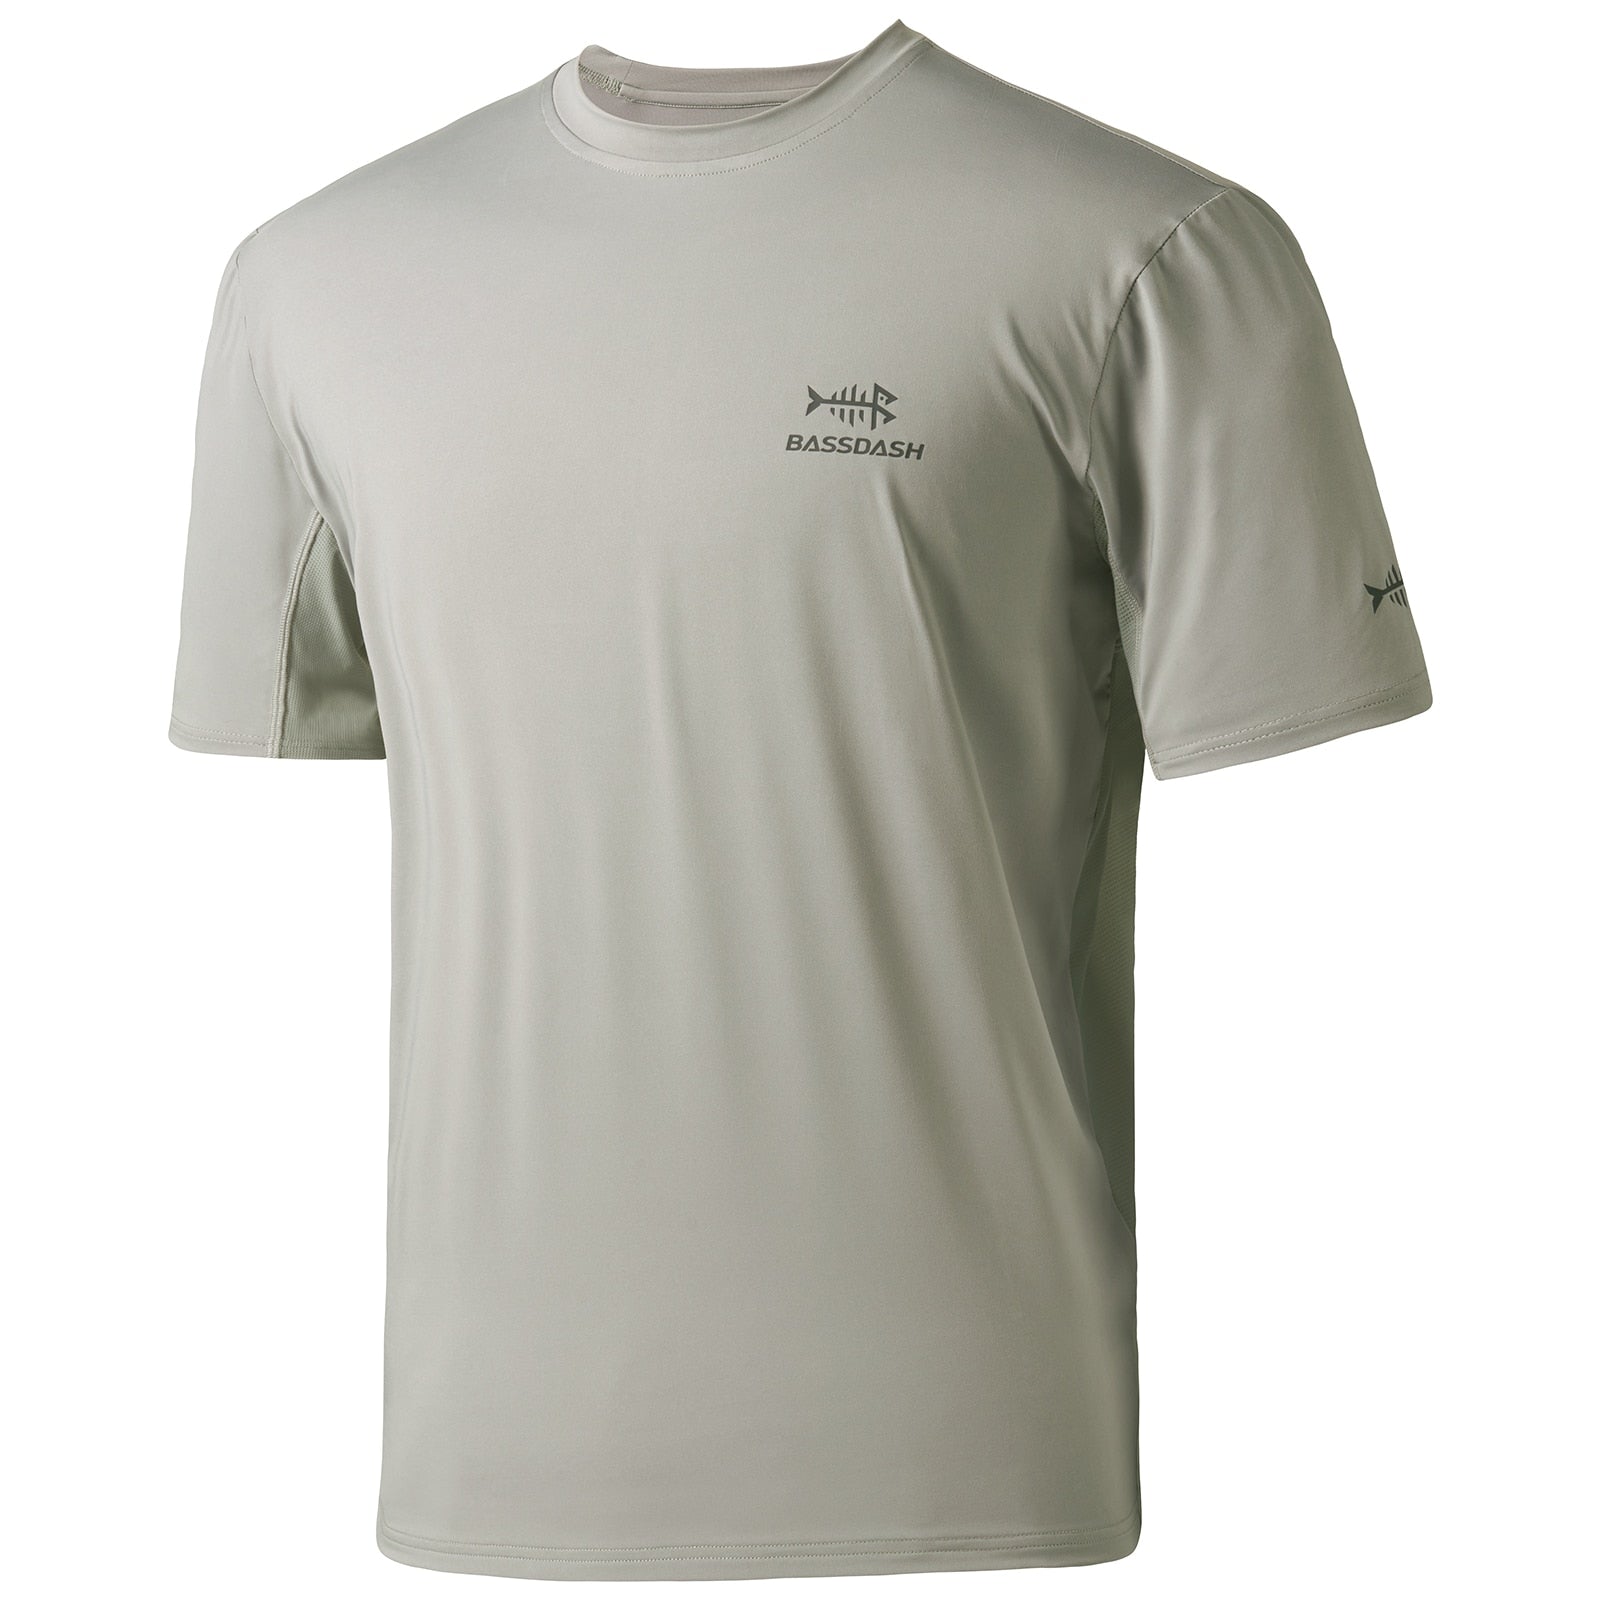 Men's ash grey short sleeve Bassdash branded t-shirt.